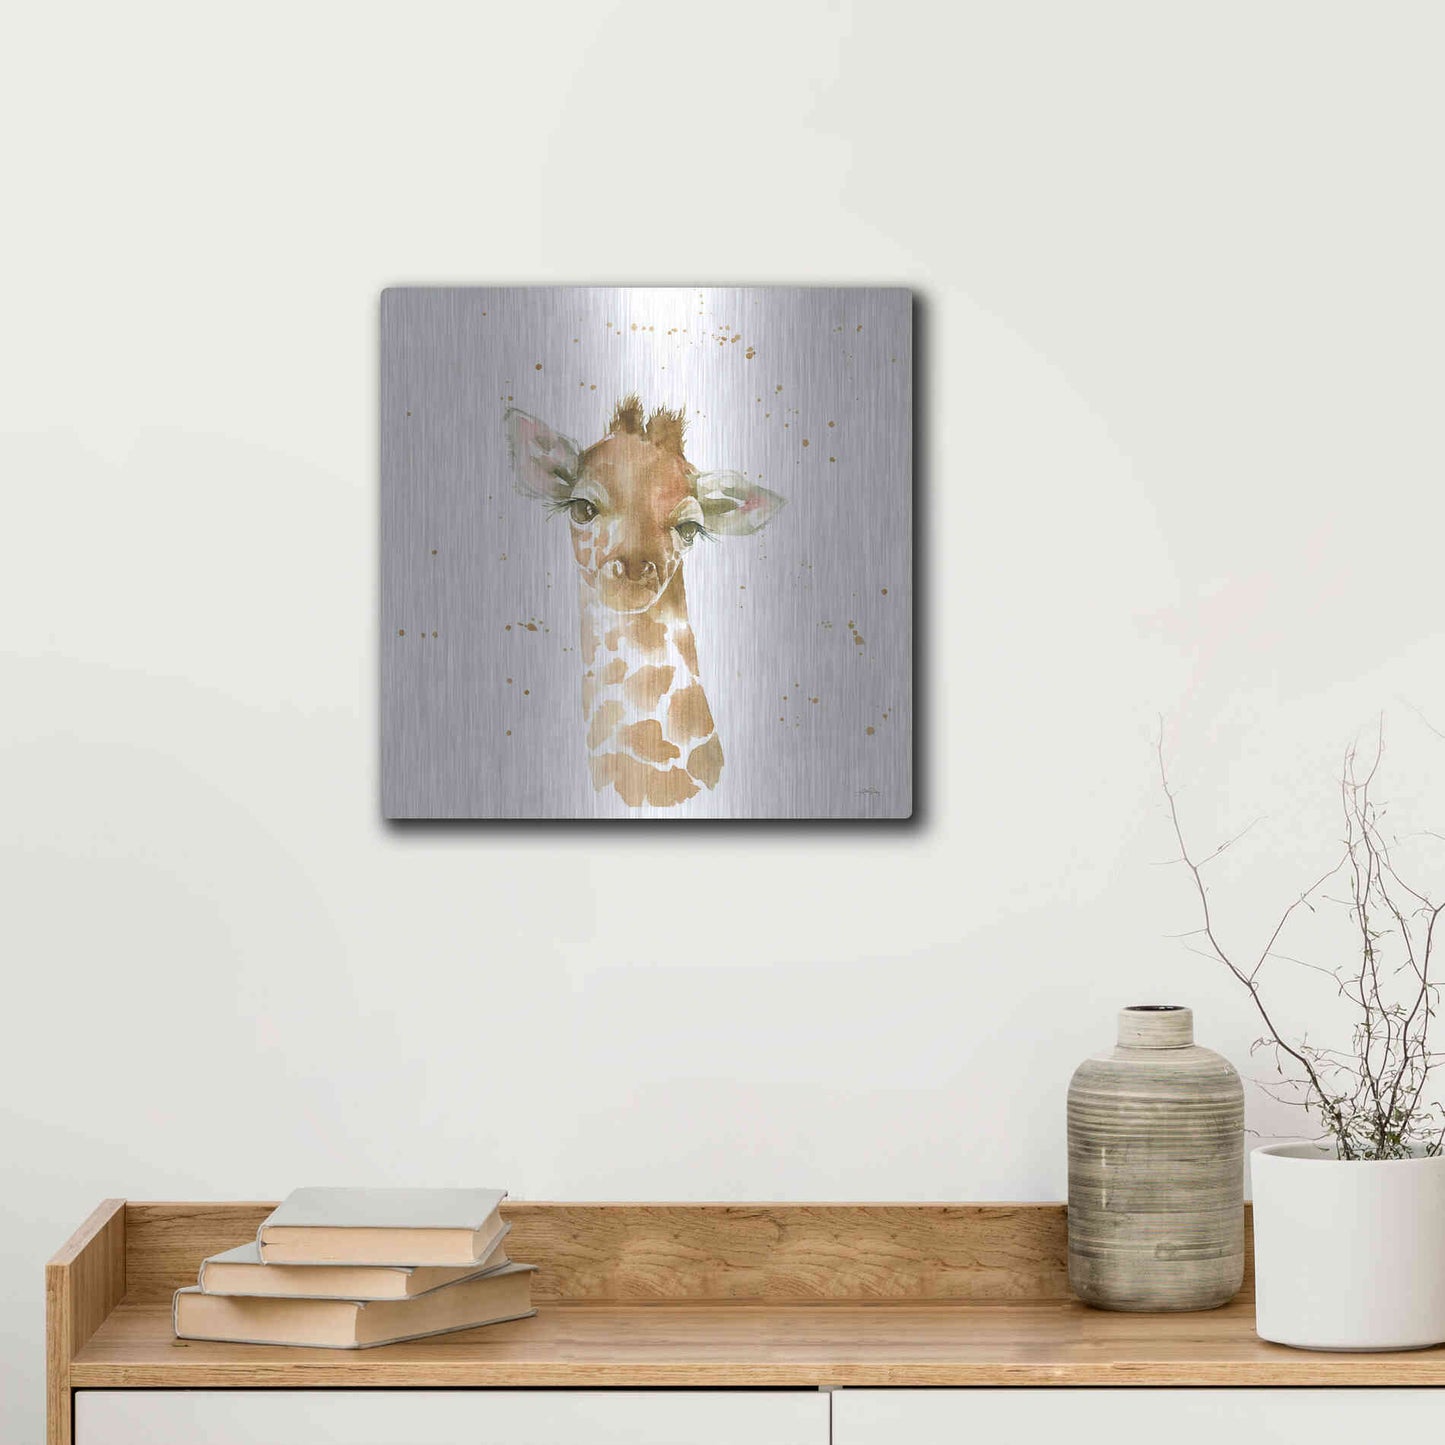 Luxe Metal Art 'Baby Giraffe' by Katrina Pete, Metal Wall Art,12x12